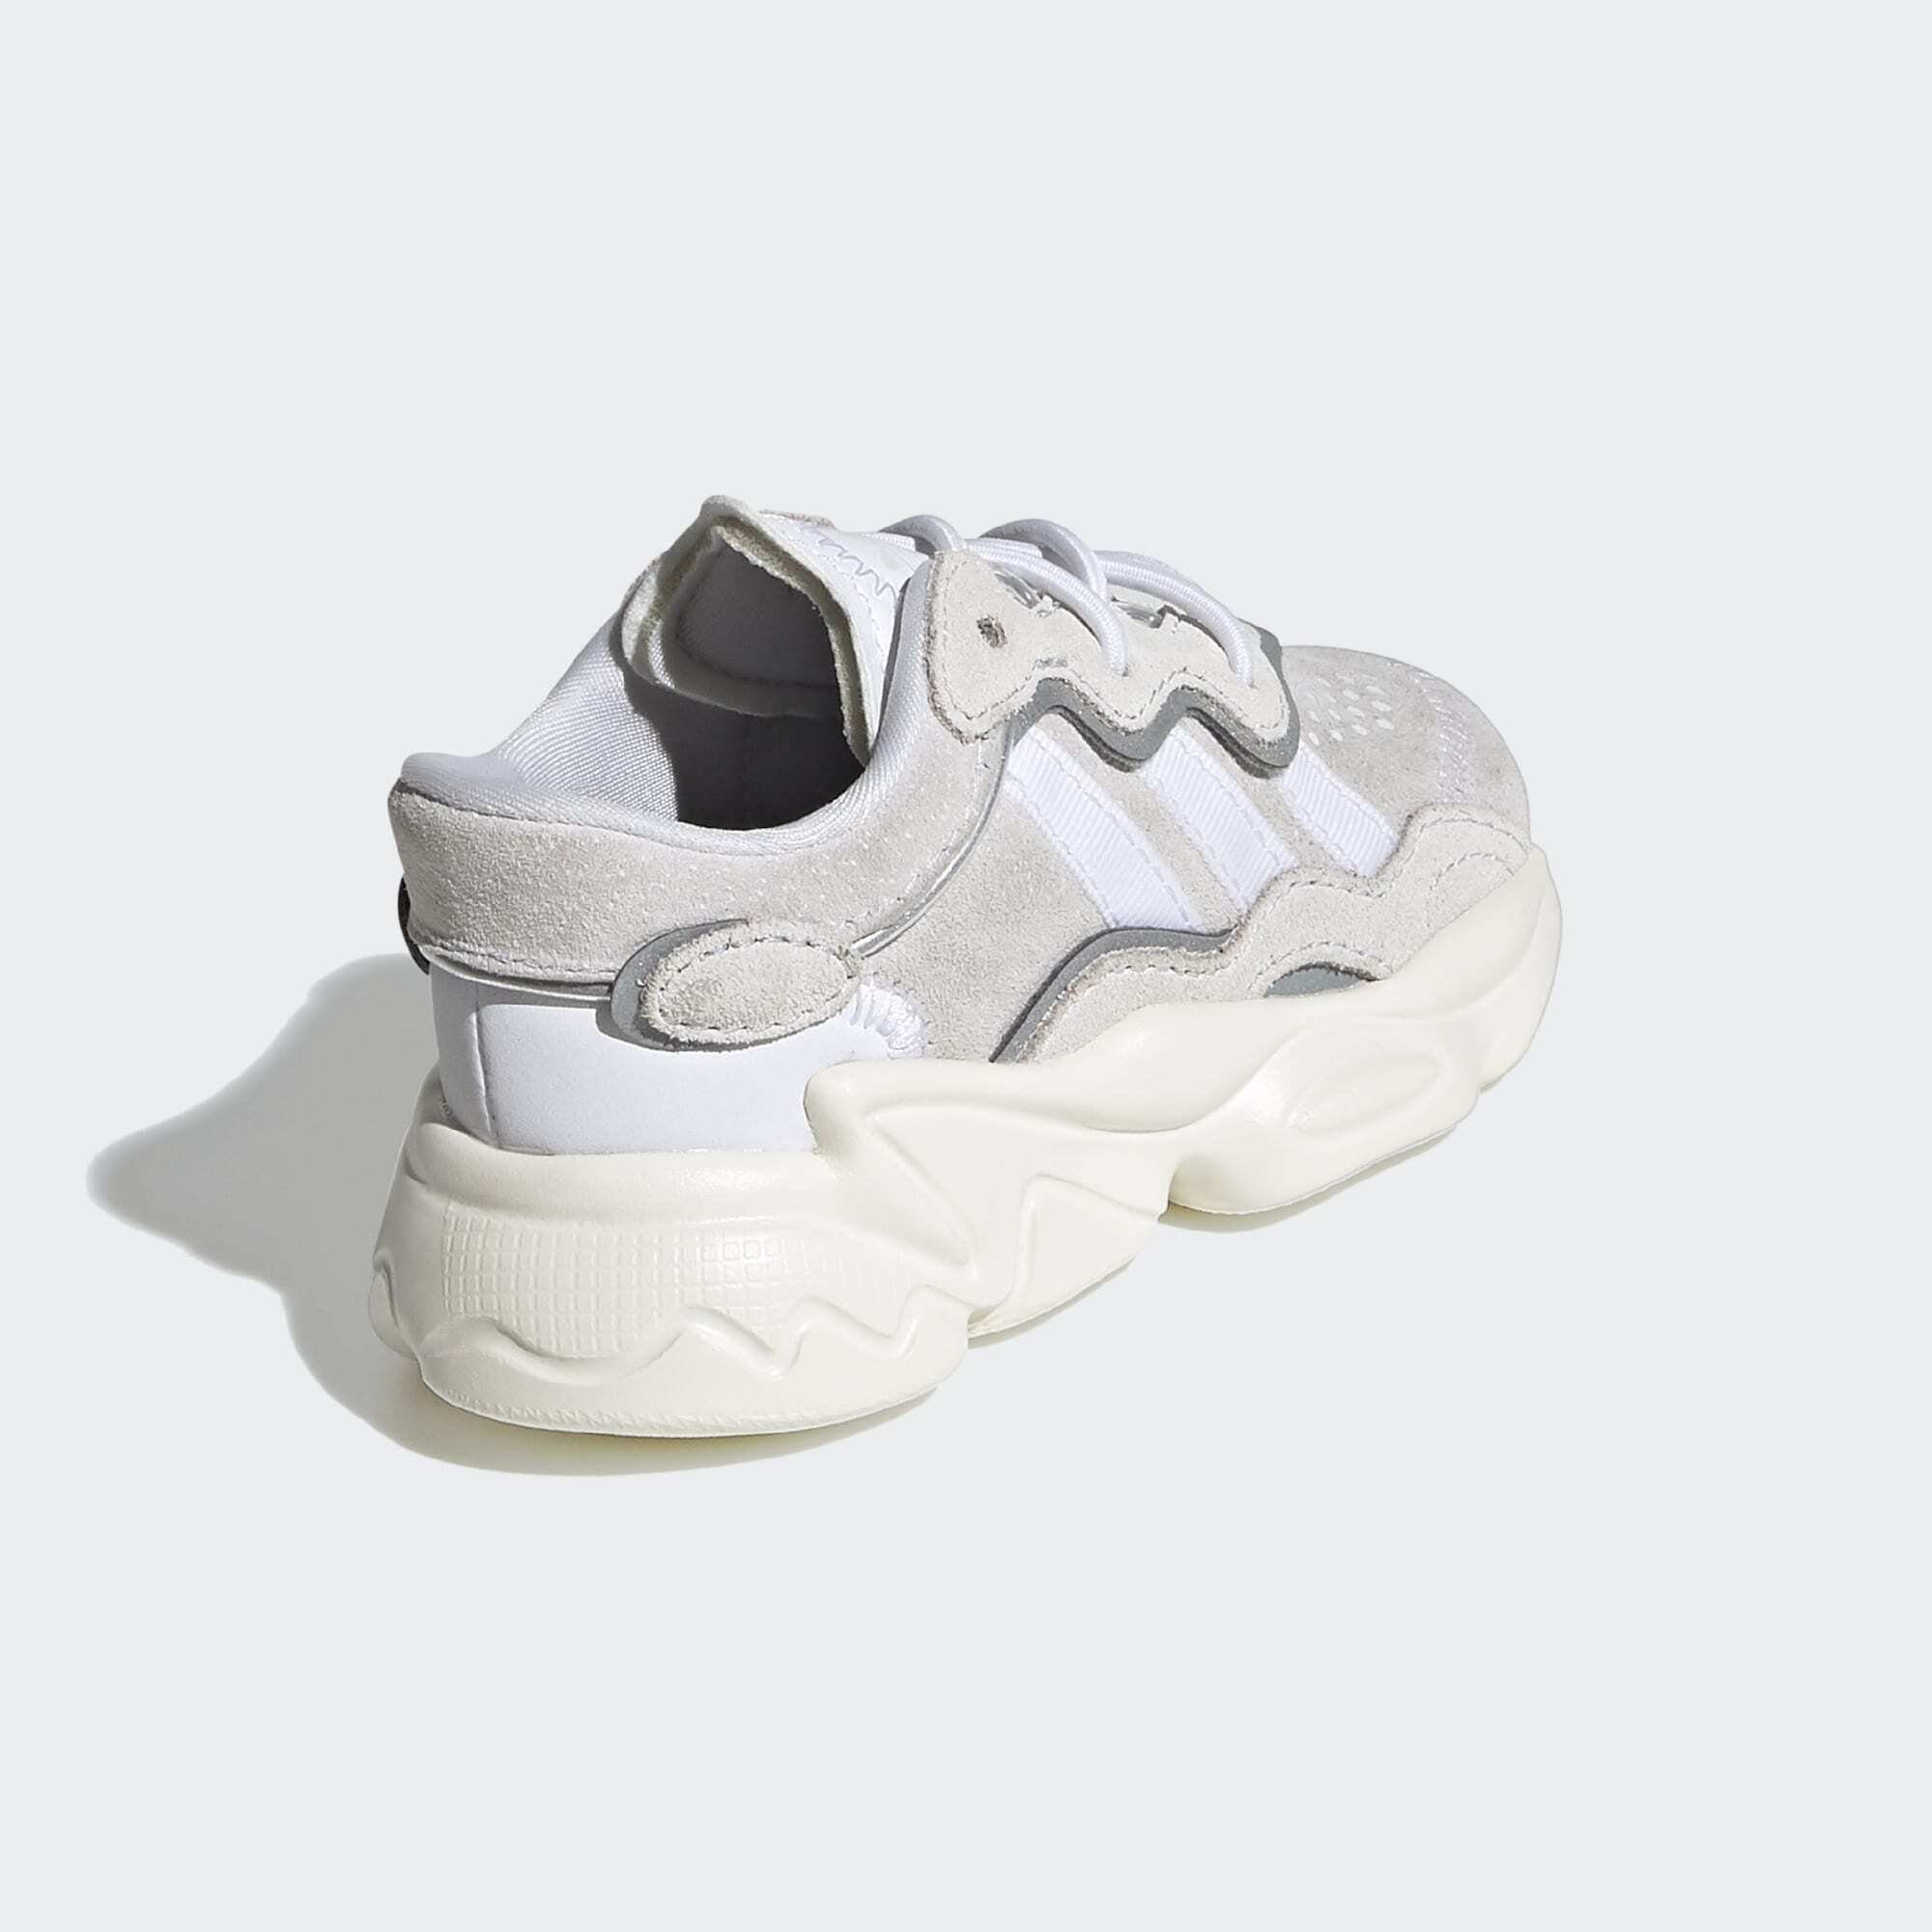 SCHUH Cloud adidas Crystal / Originals White White OZWEEGO Off White Sneaker /